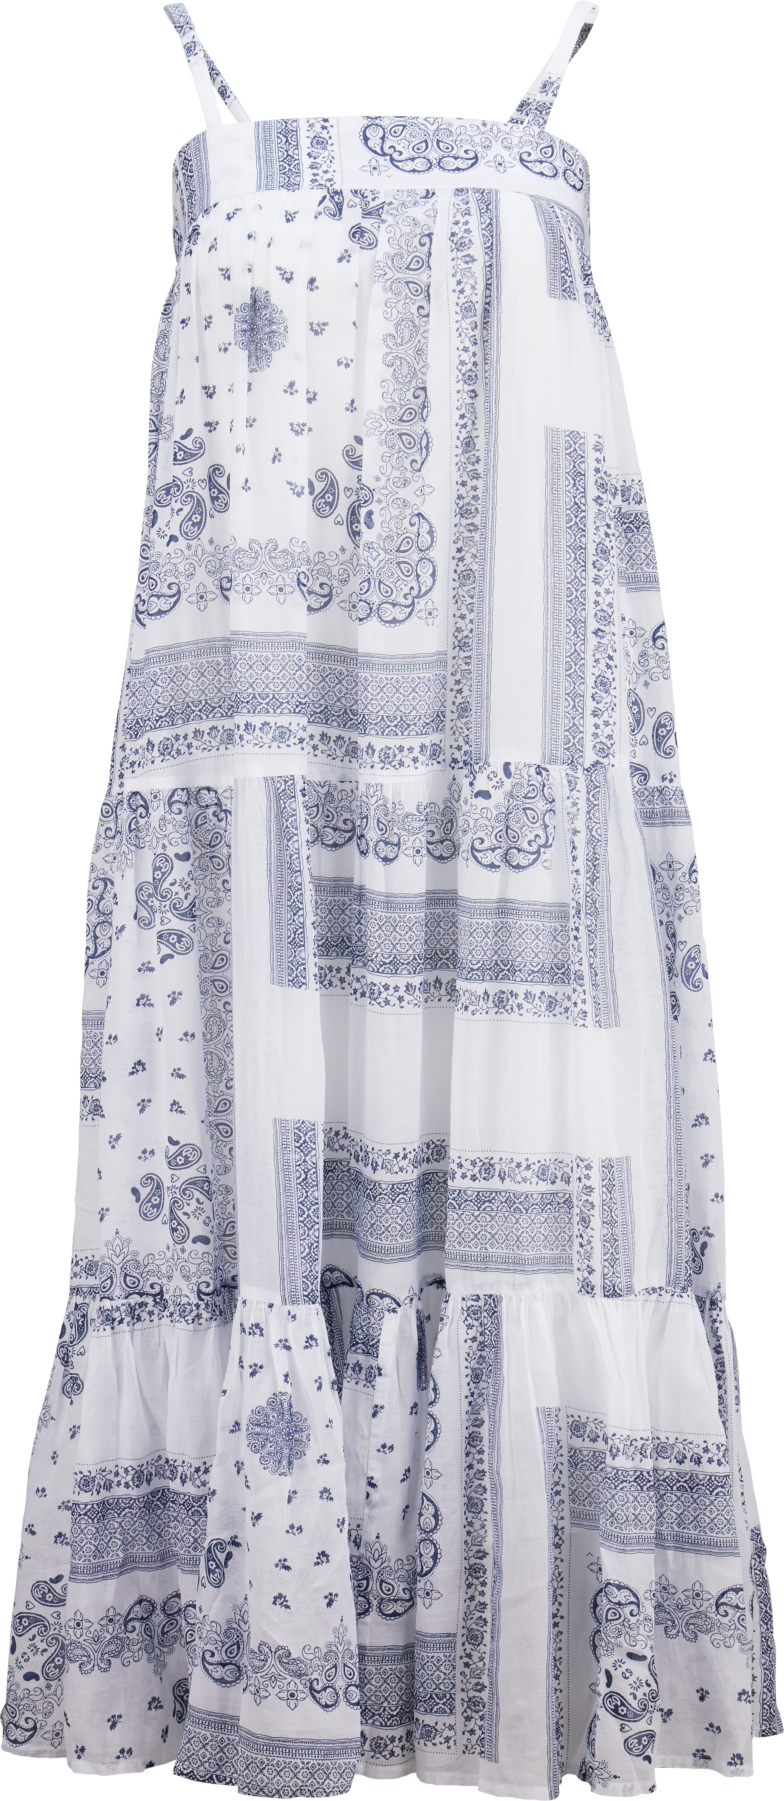 Semicouture Kleid in Weiß mit Ornamente-Muster 435431